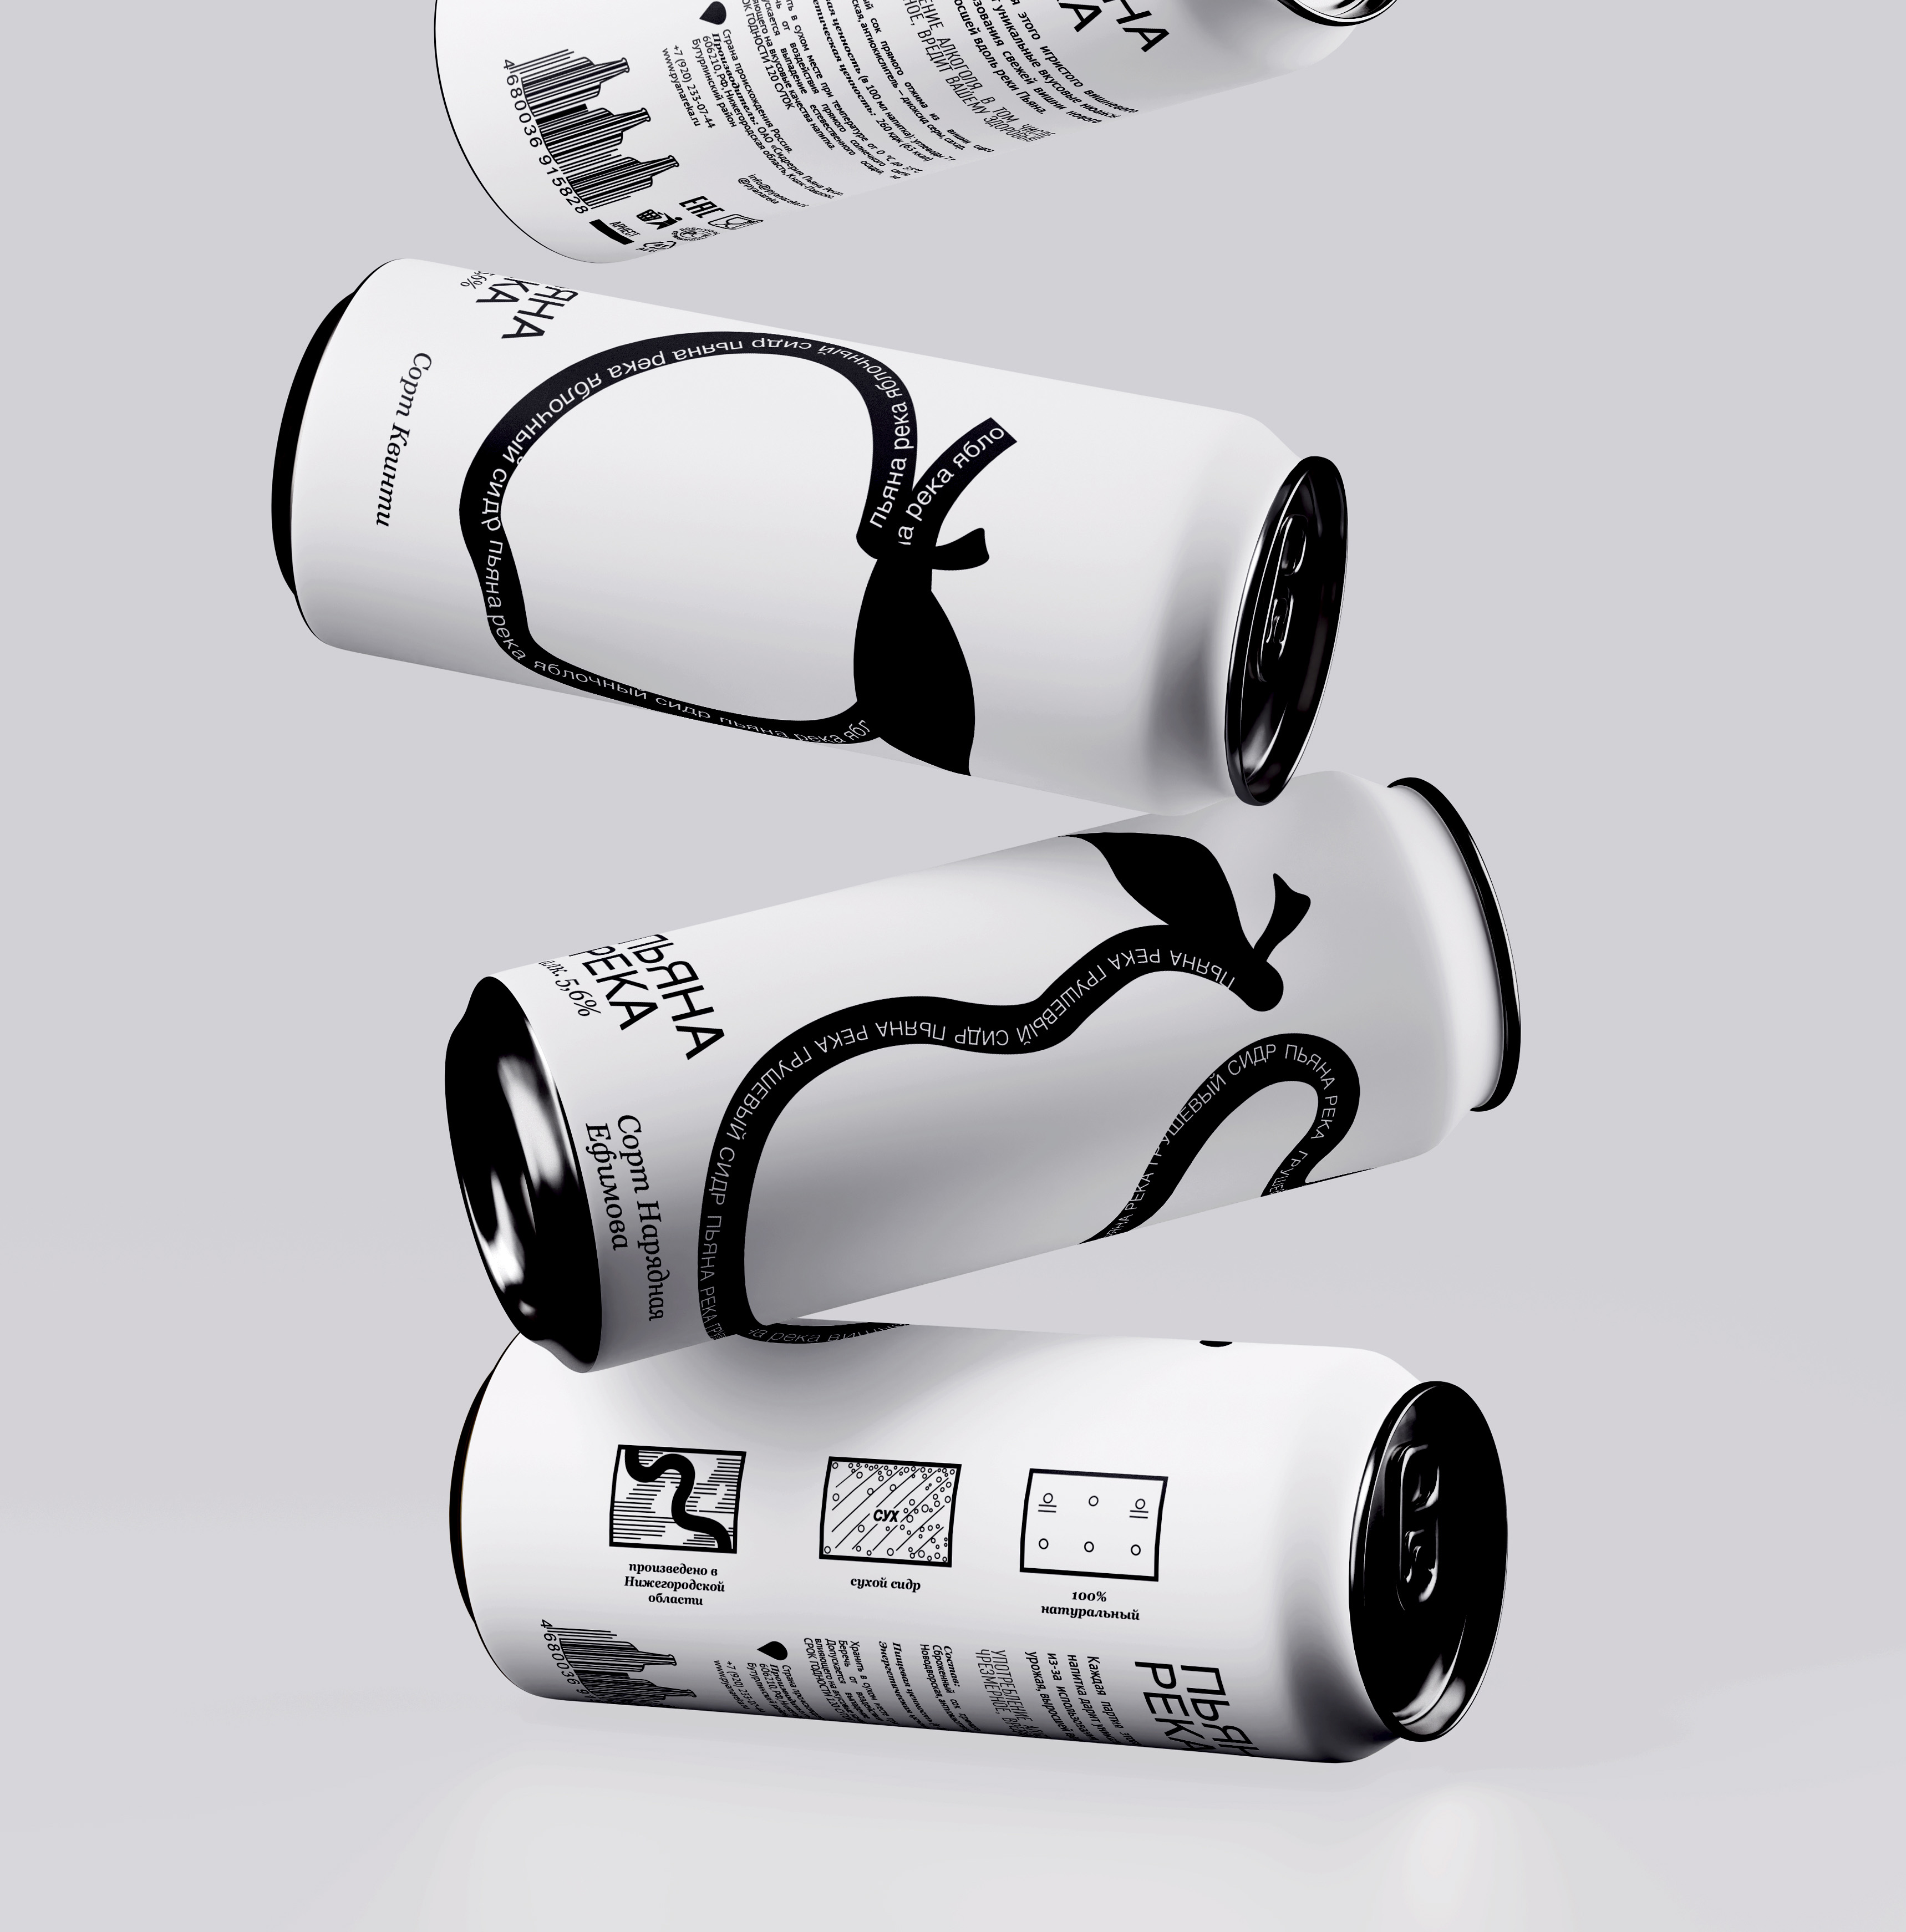 Piana Reka Cider Brand and Packaging Design by Student Dymova Ulana